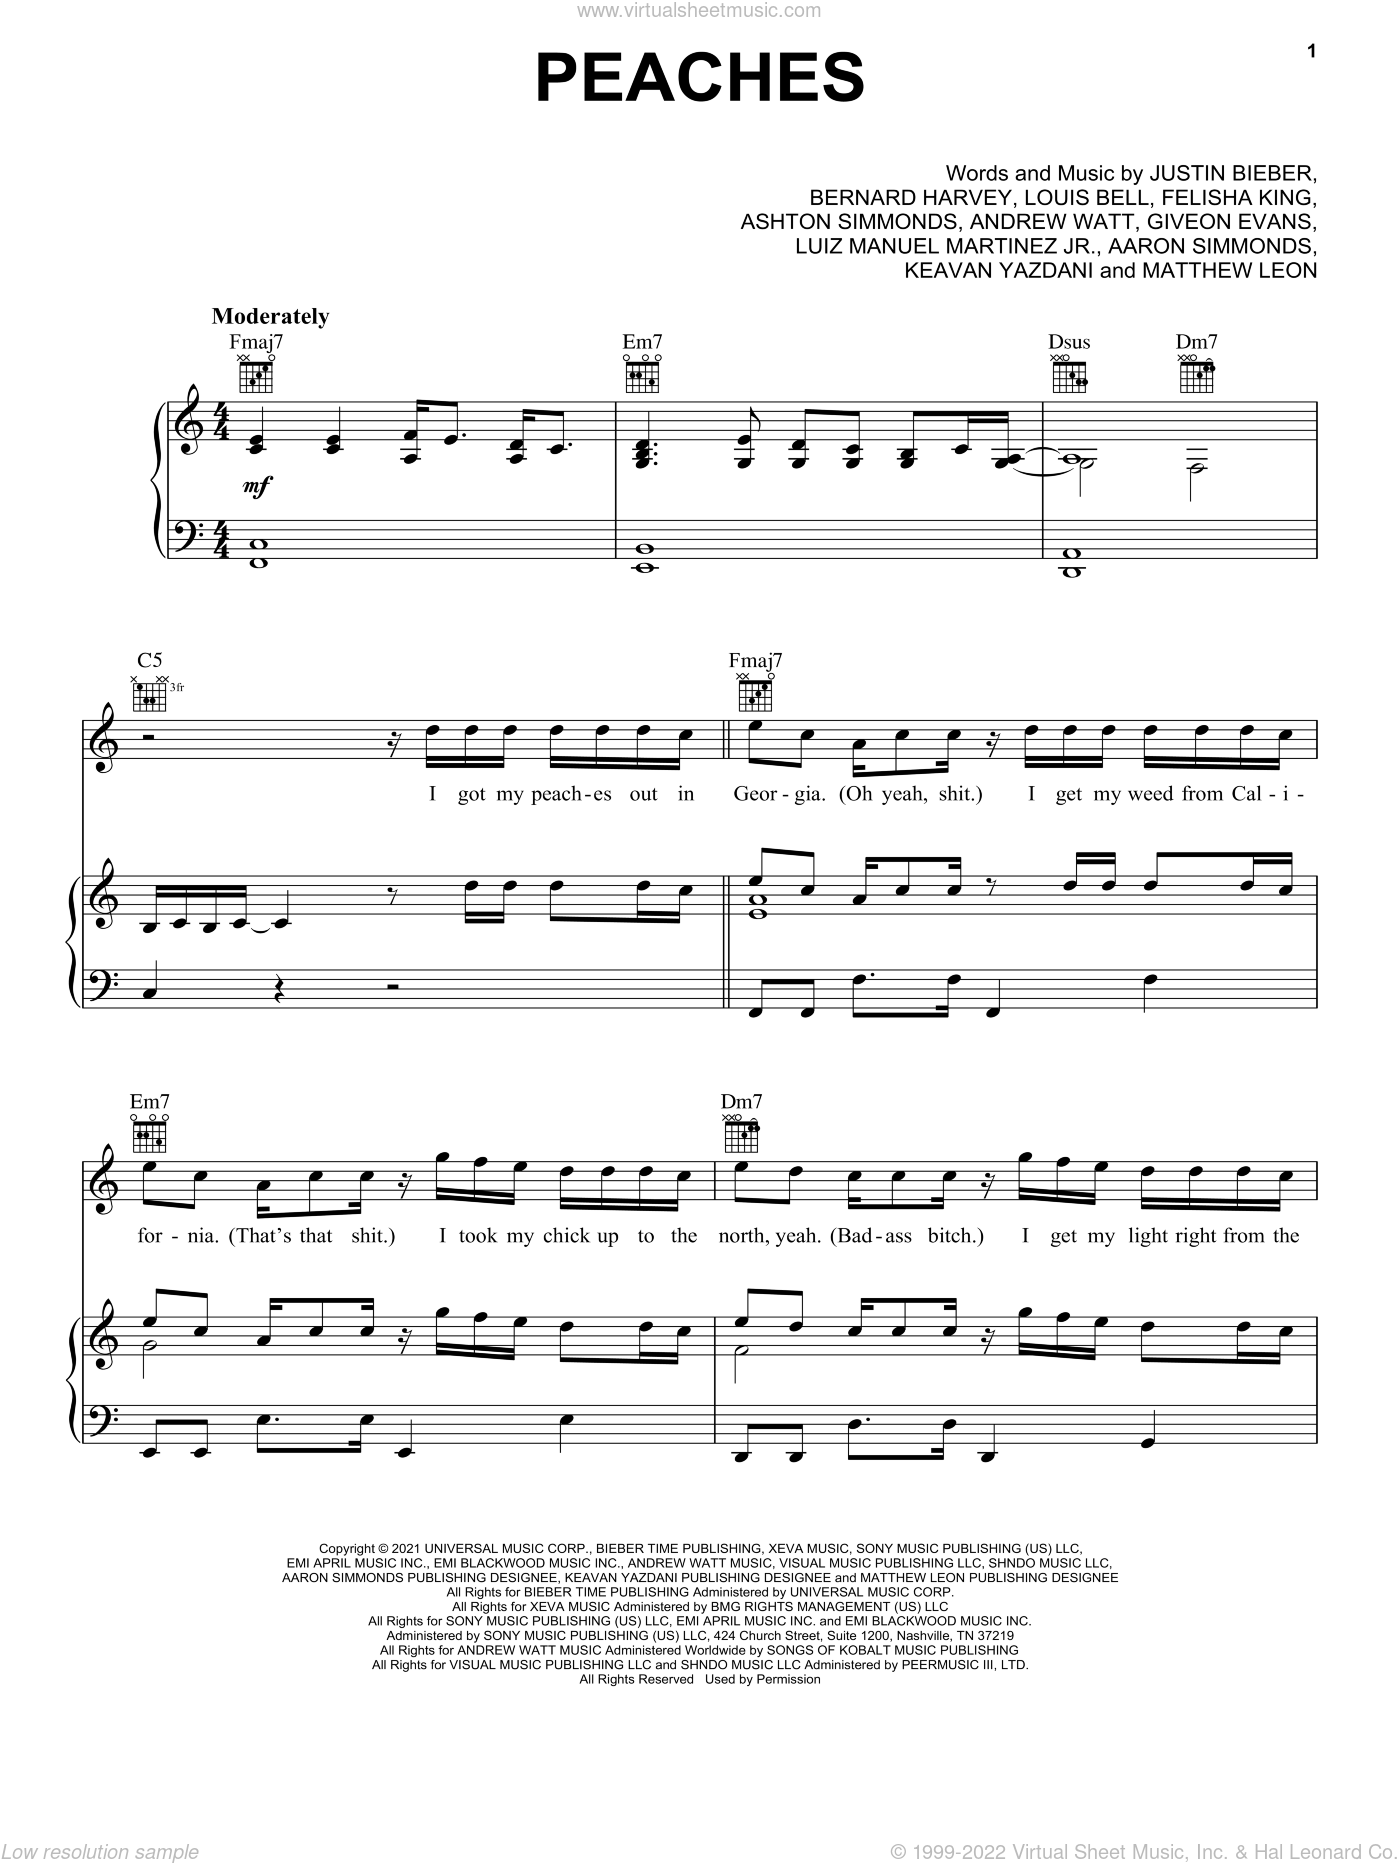 Peaches - Piano, Vocal, Guitar - Digital Sheet Music